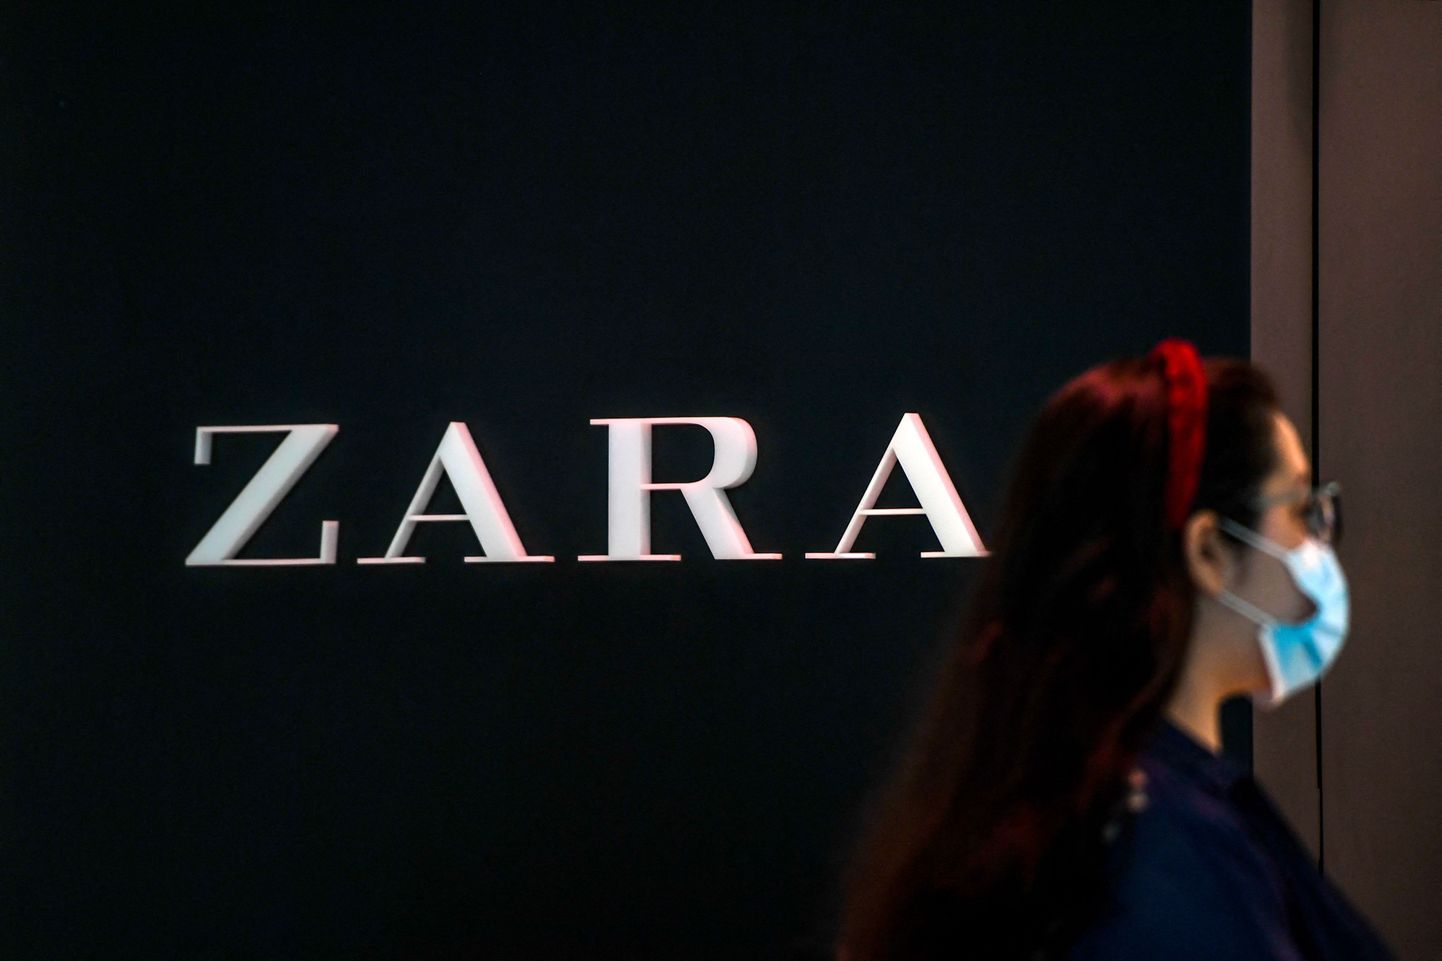 Rõivafirma Zara logo. Foto on illustratiivne.